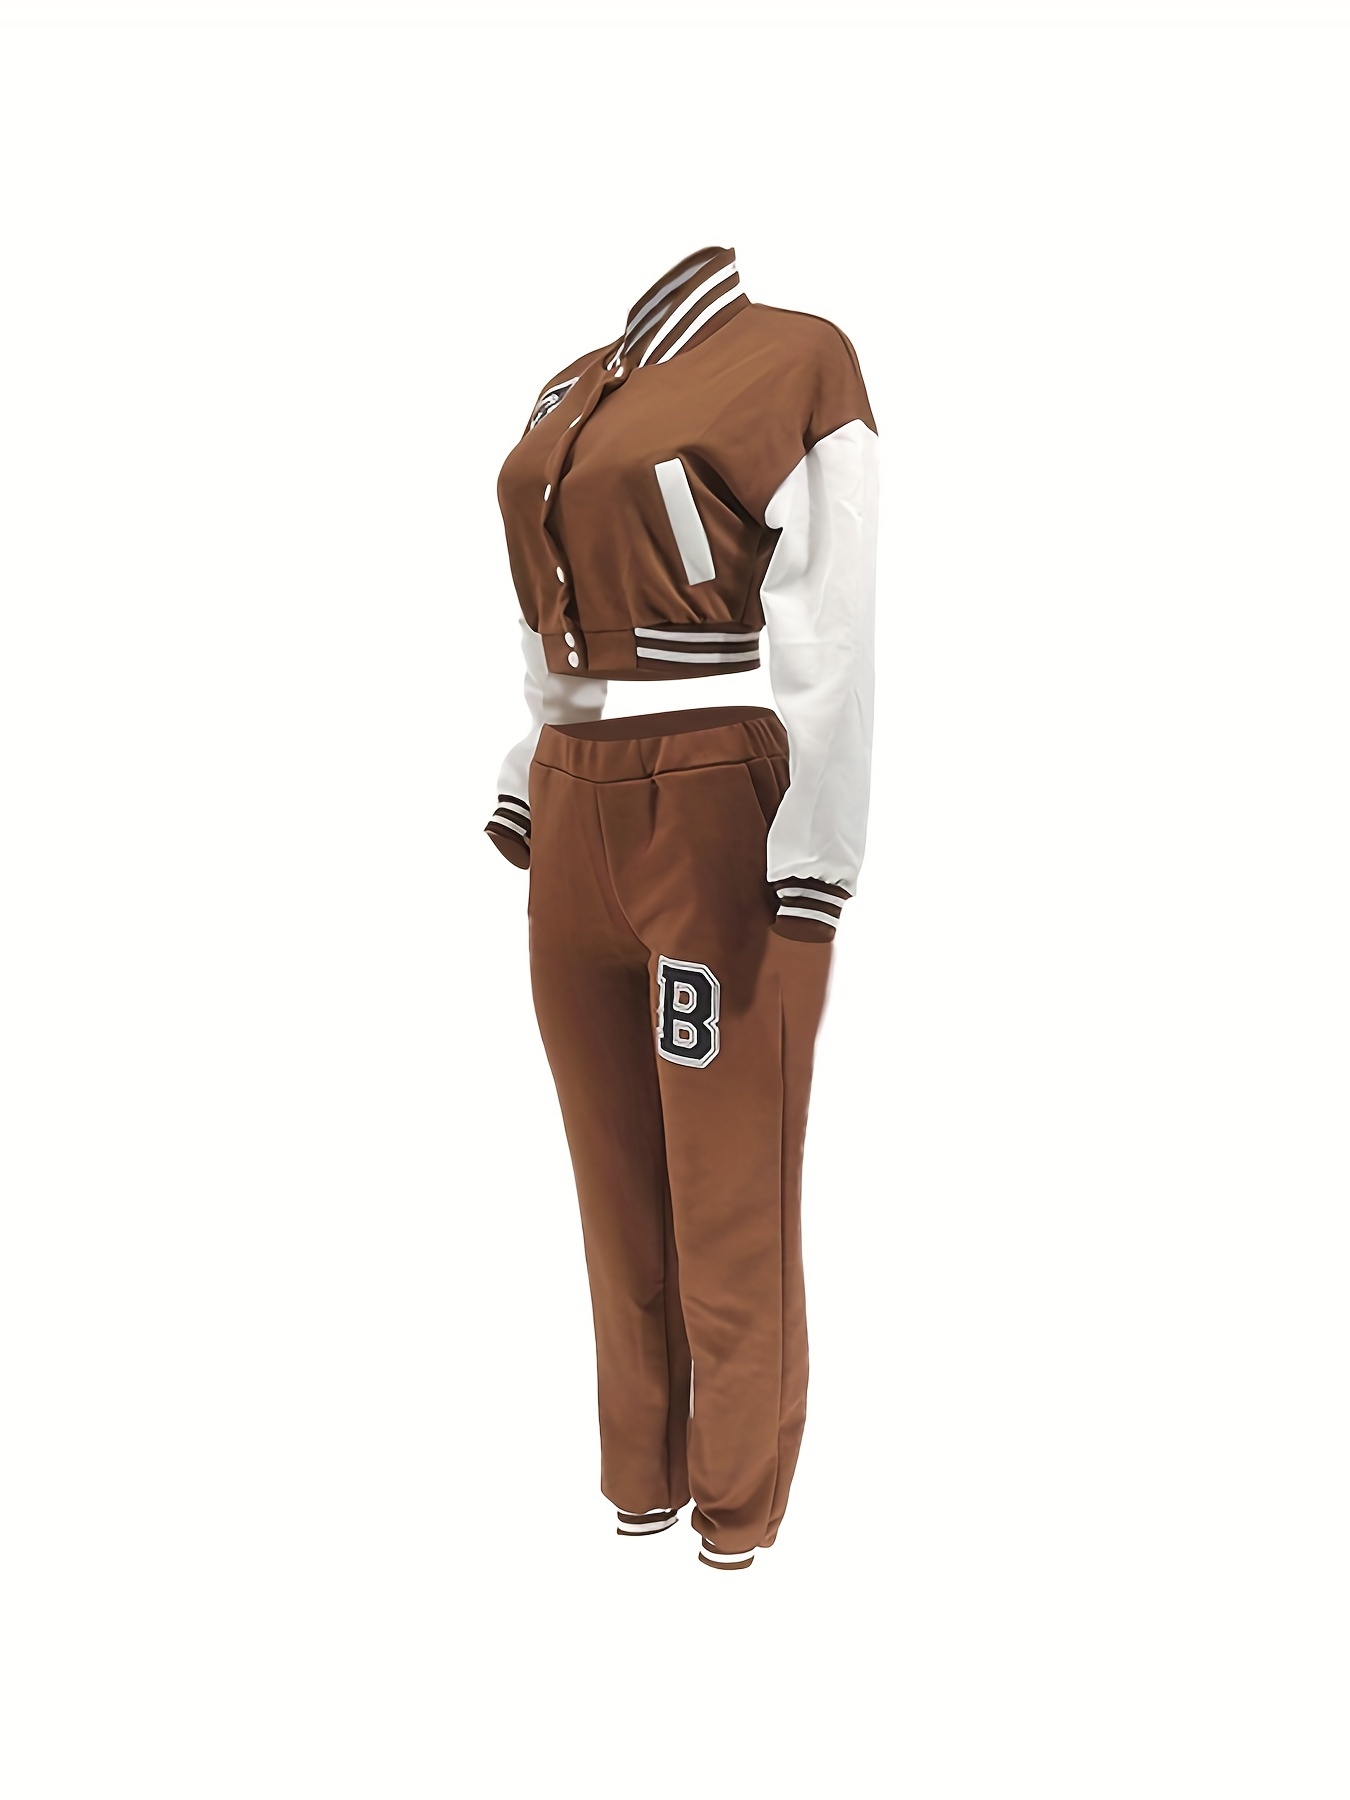 Jacket/Shurg Style Dresses Girls Clothing Sets Pack Of 1 ( Set OF 3 )Girls  Trending Co-ord 3 piece set | Top Shrug and Pants | Girls Clothing Set 